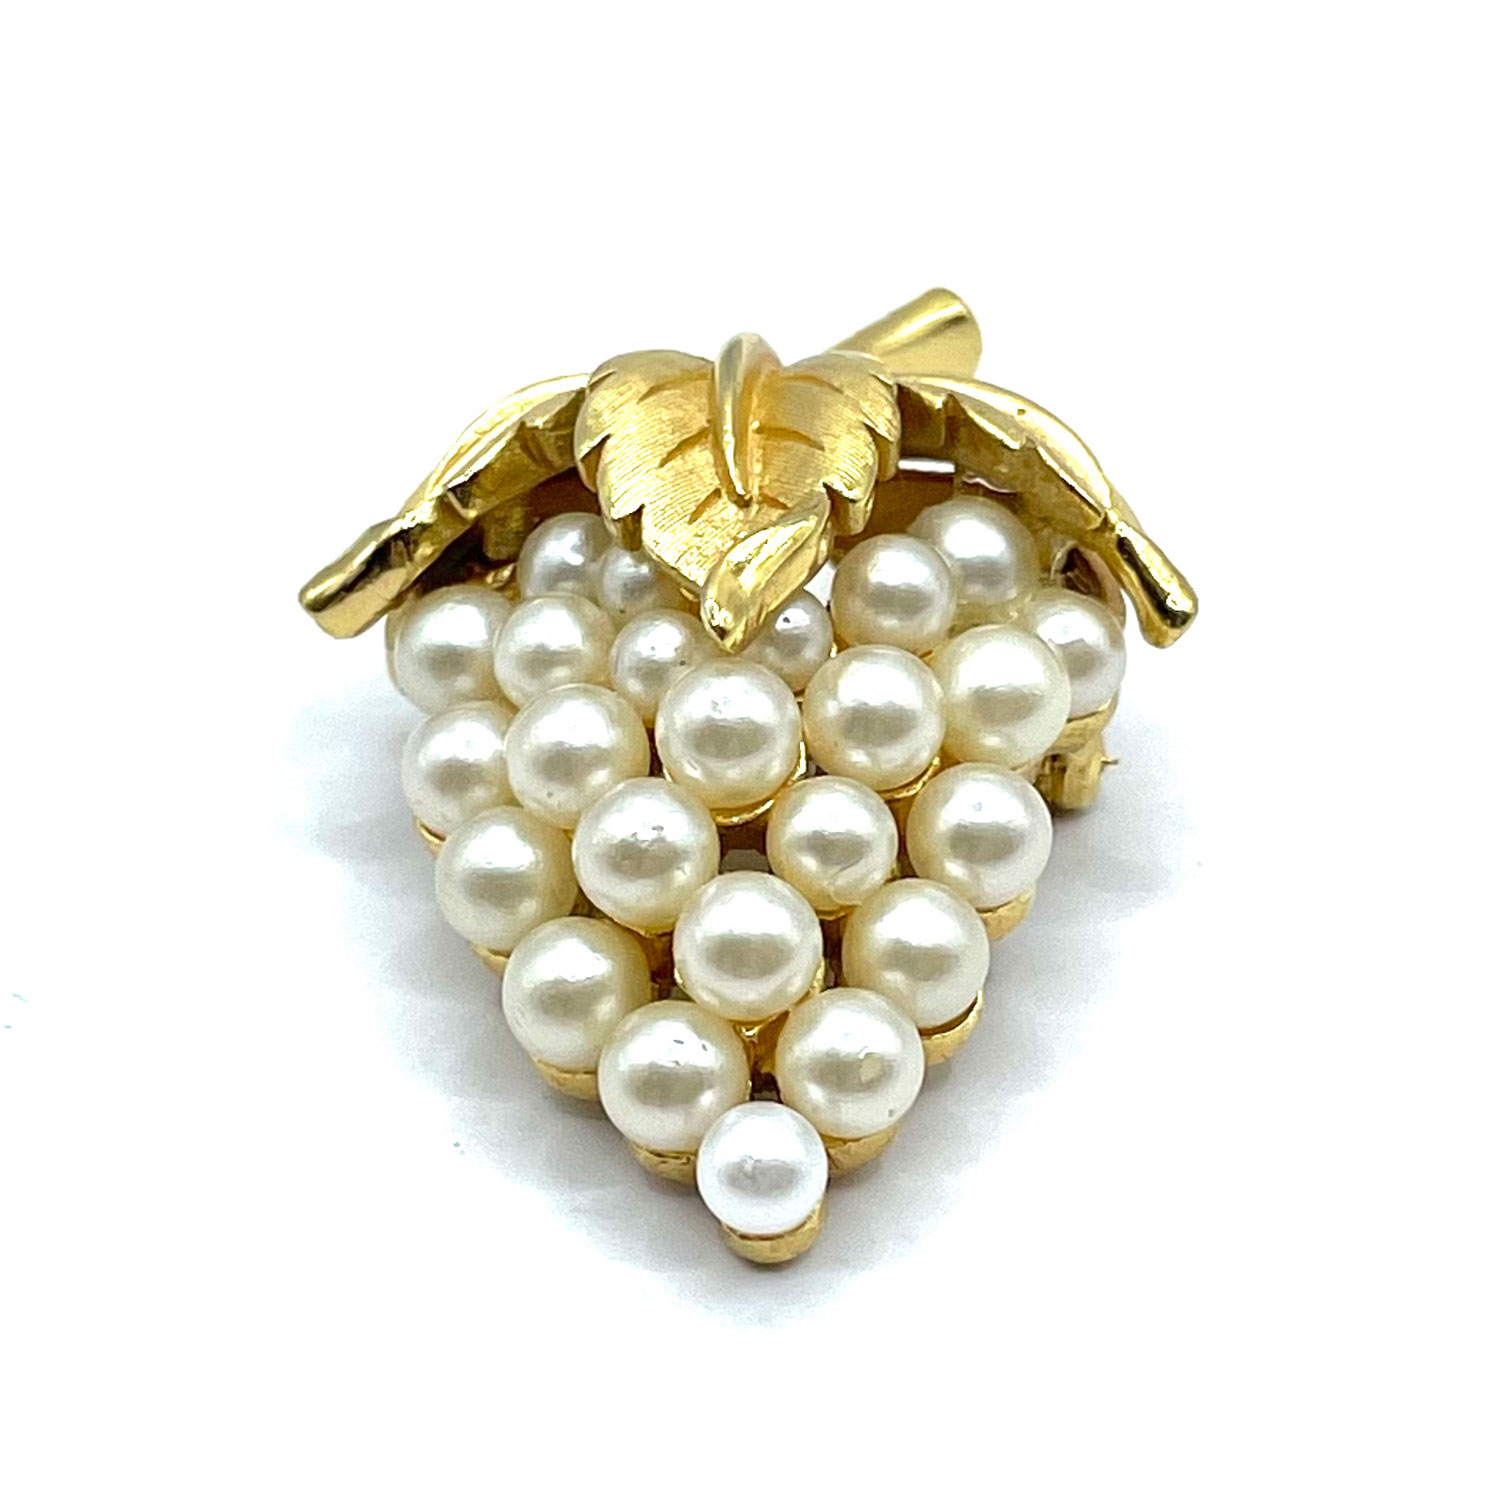 Crown Trifari faux pearl grapes brooch